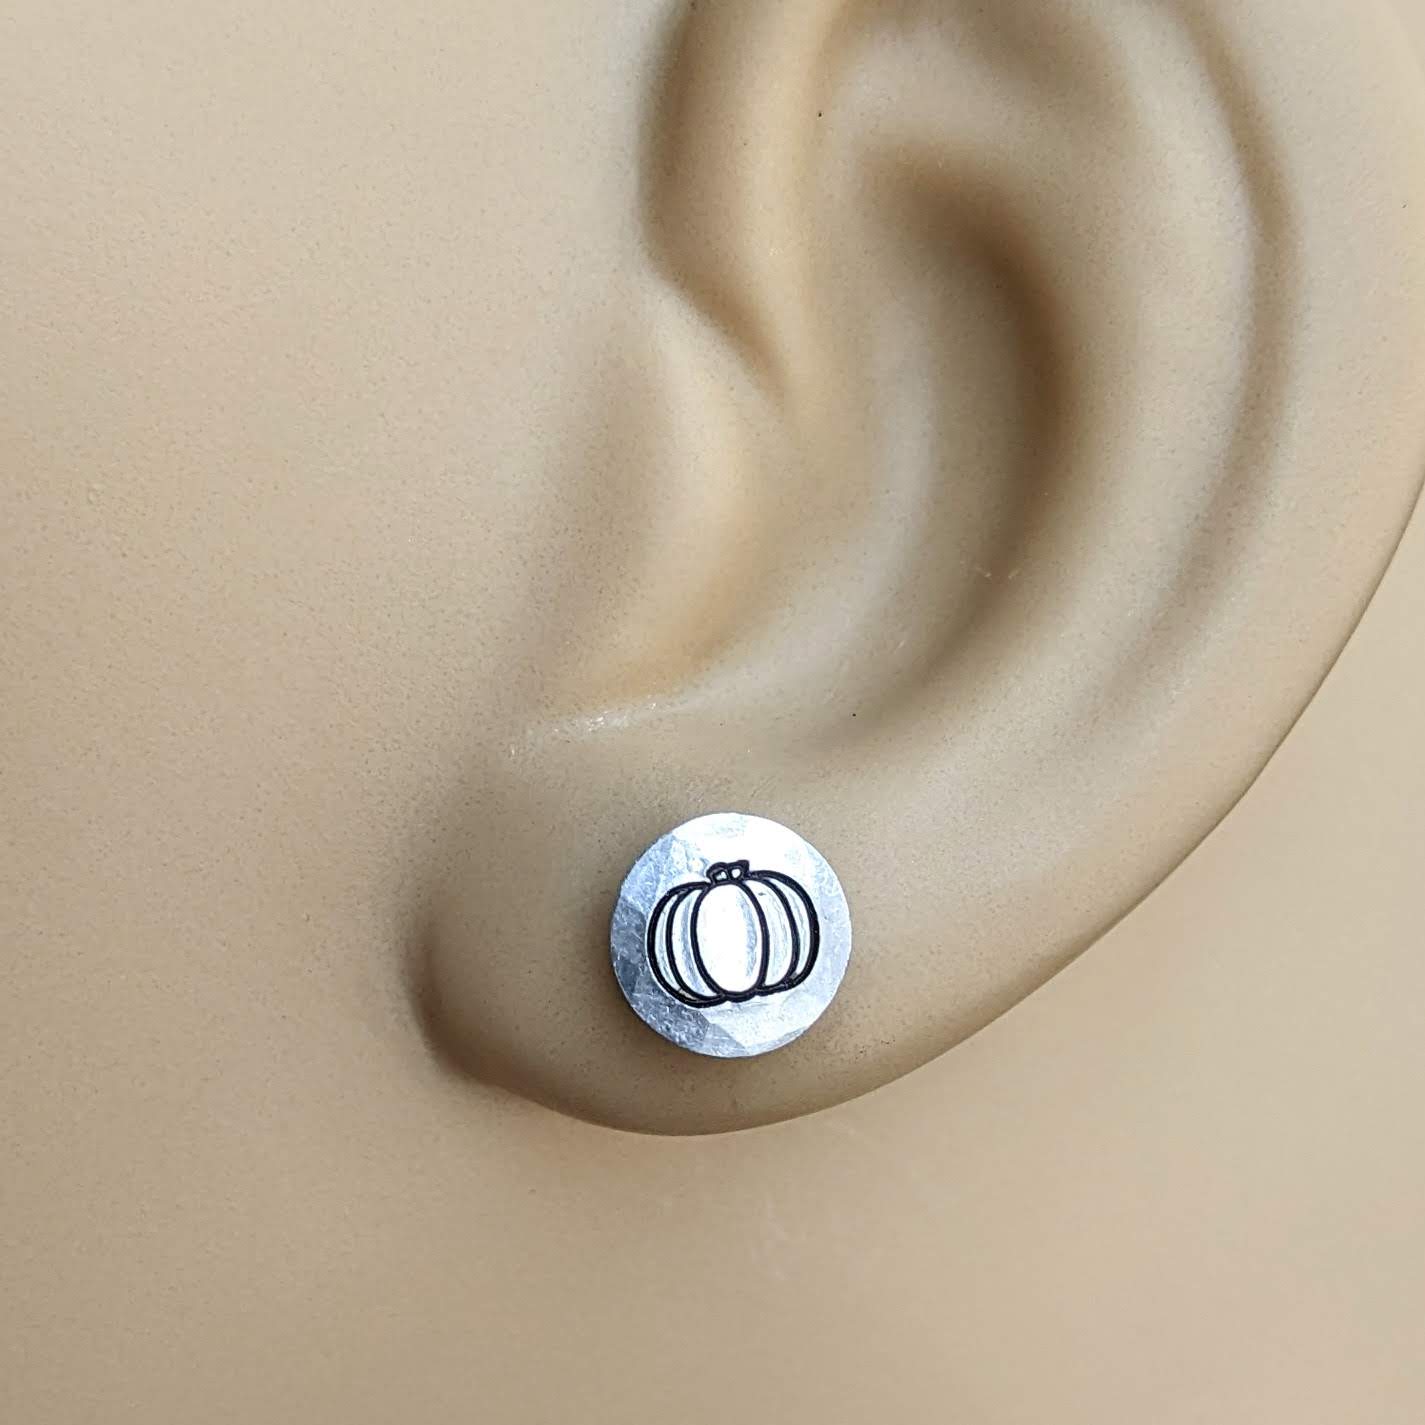 Pumpkin Stud Earrings 6mm - Hypoallergenic Titanium Posts